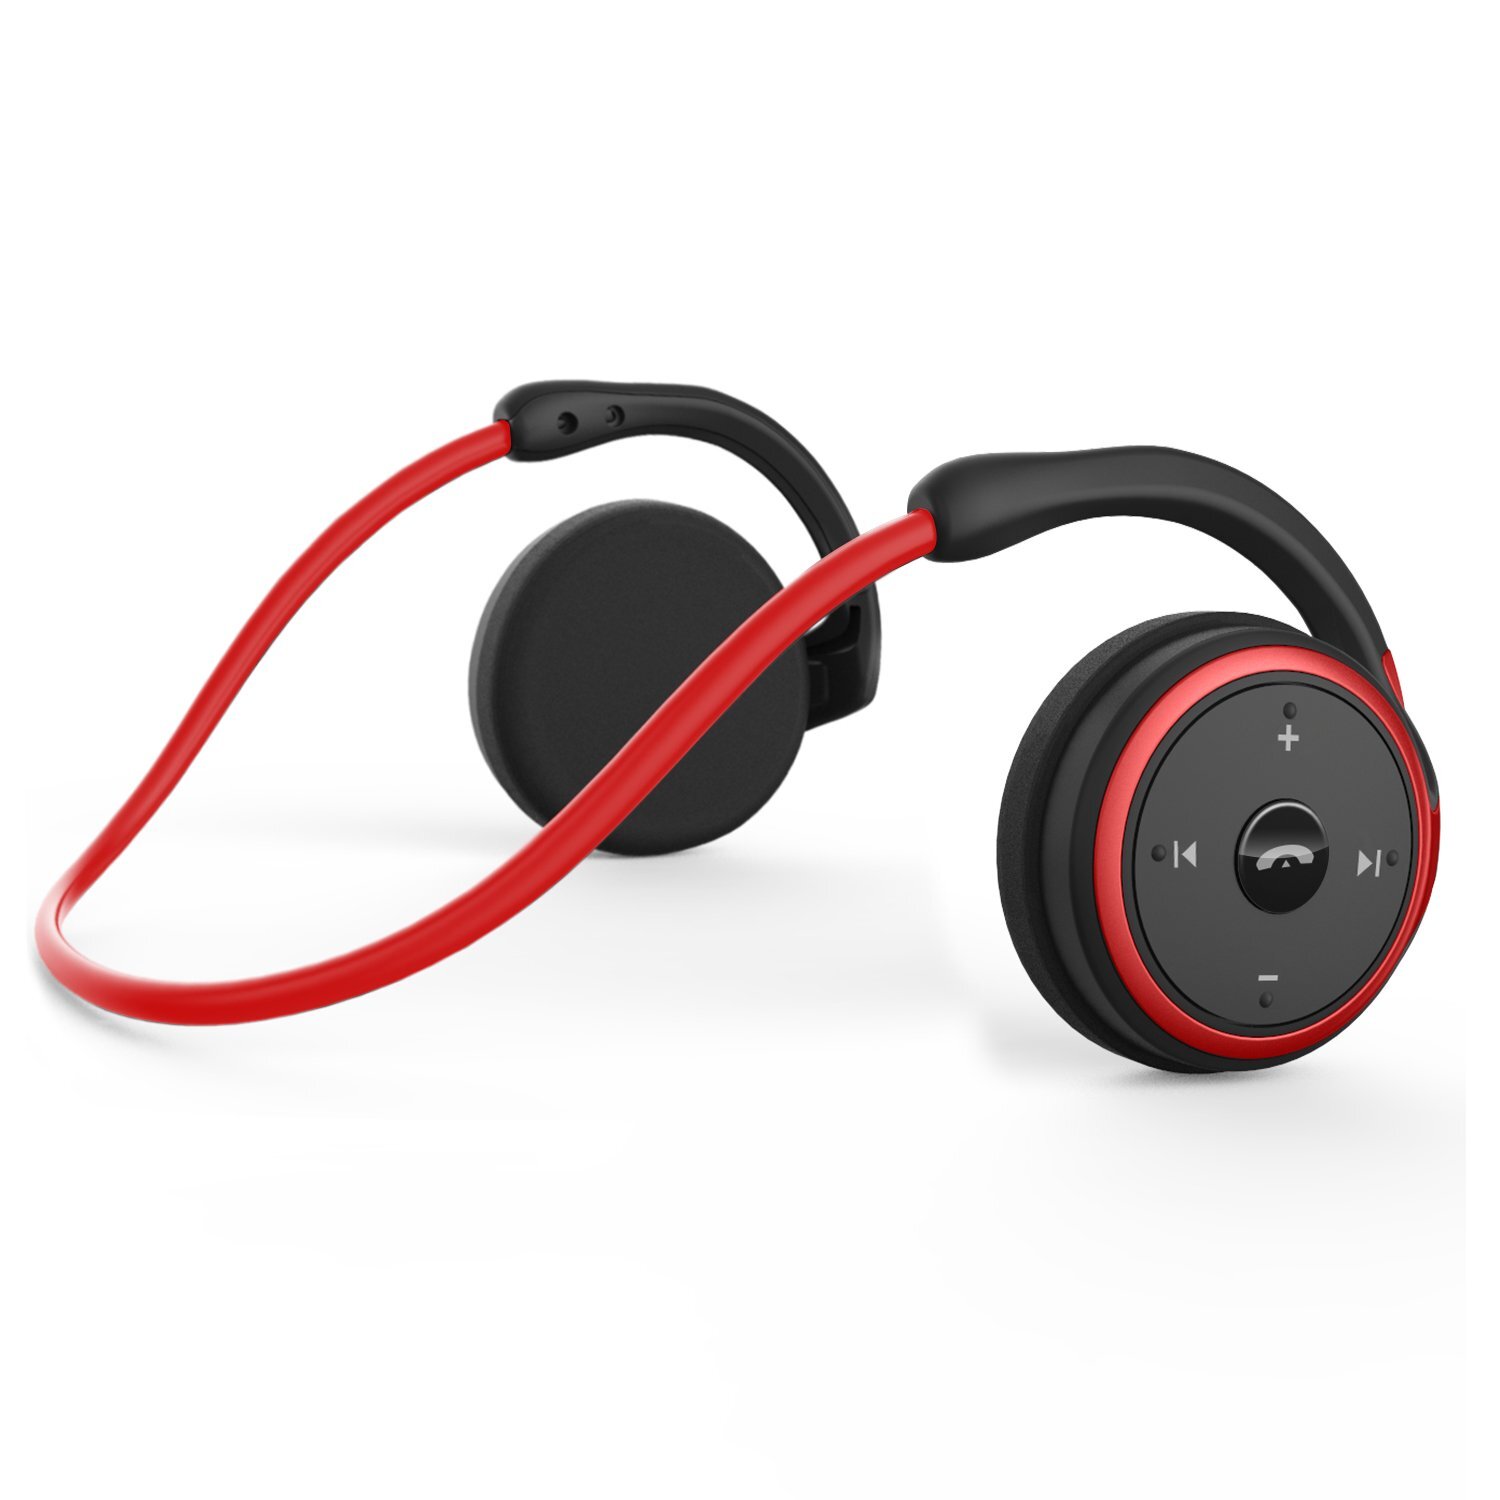 Купить наушники без проводных. Наушники Sport Wireless Headset Earphone 4.2. Wireless Bluetooth stereo Headset CSR4.2. Беспроводные наушники блютуз 4.2. Наушники x5 BT 5.0 Comfy Fit.